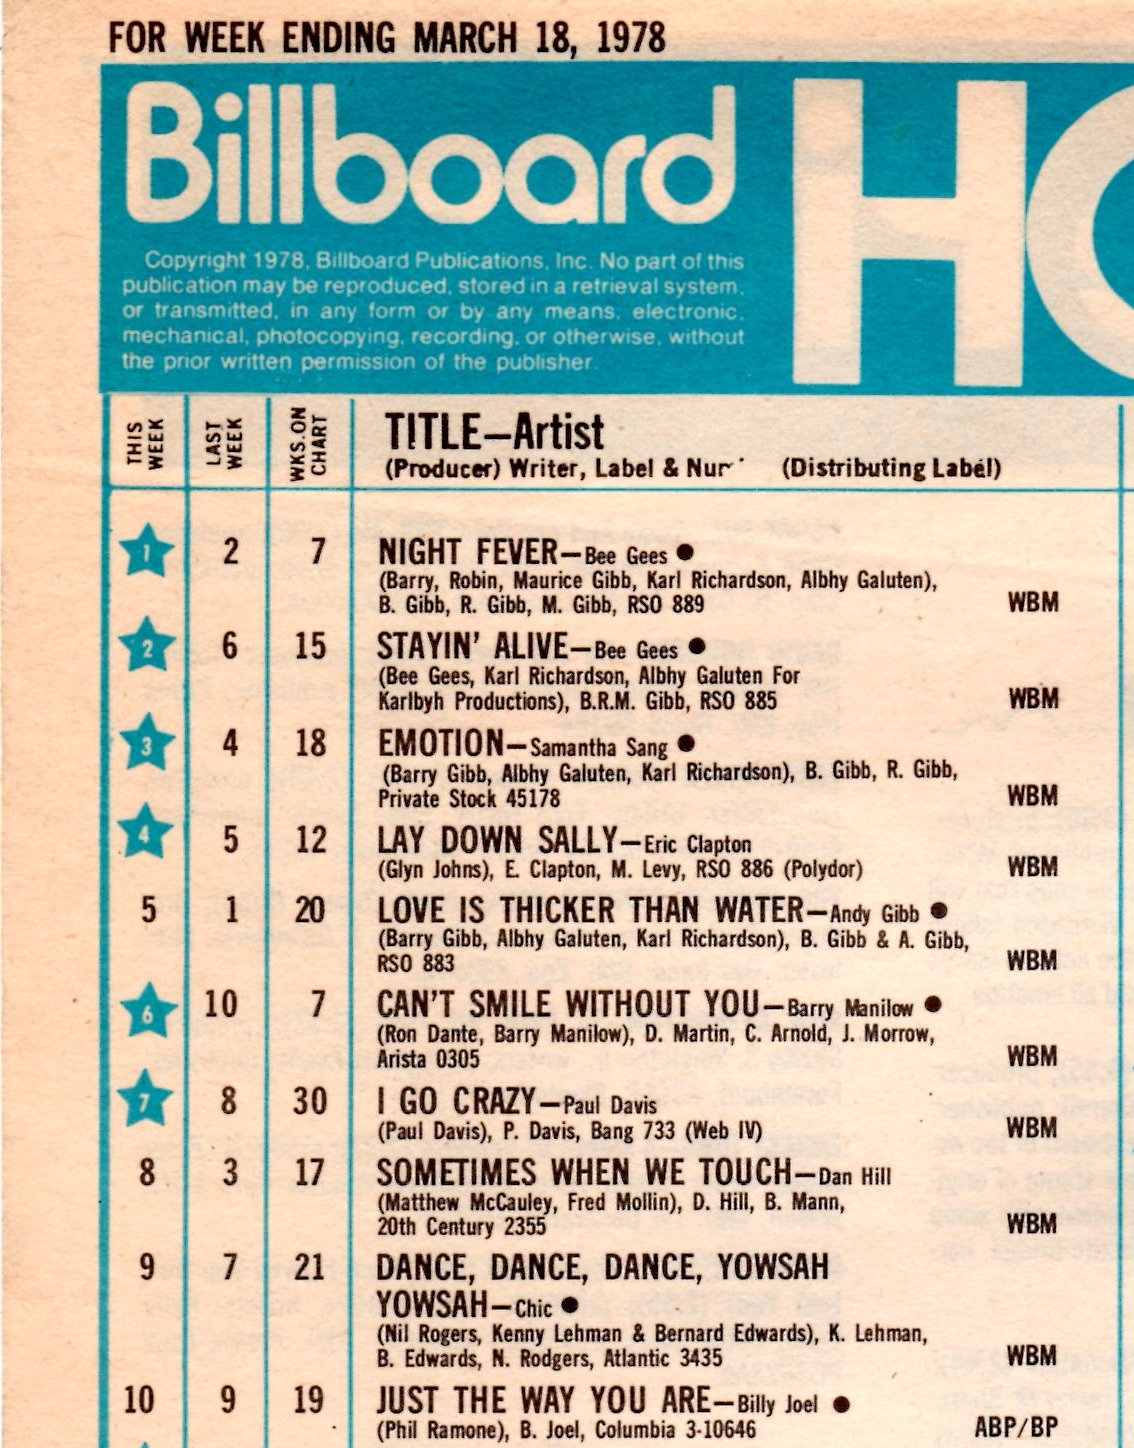 Billboard Charts 1978 By Week